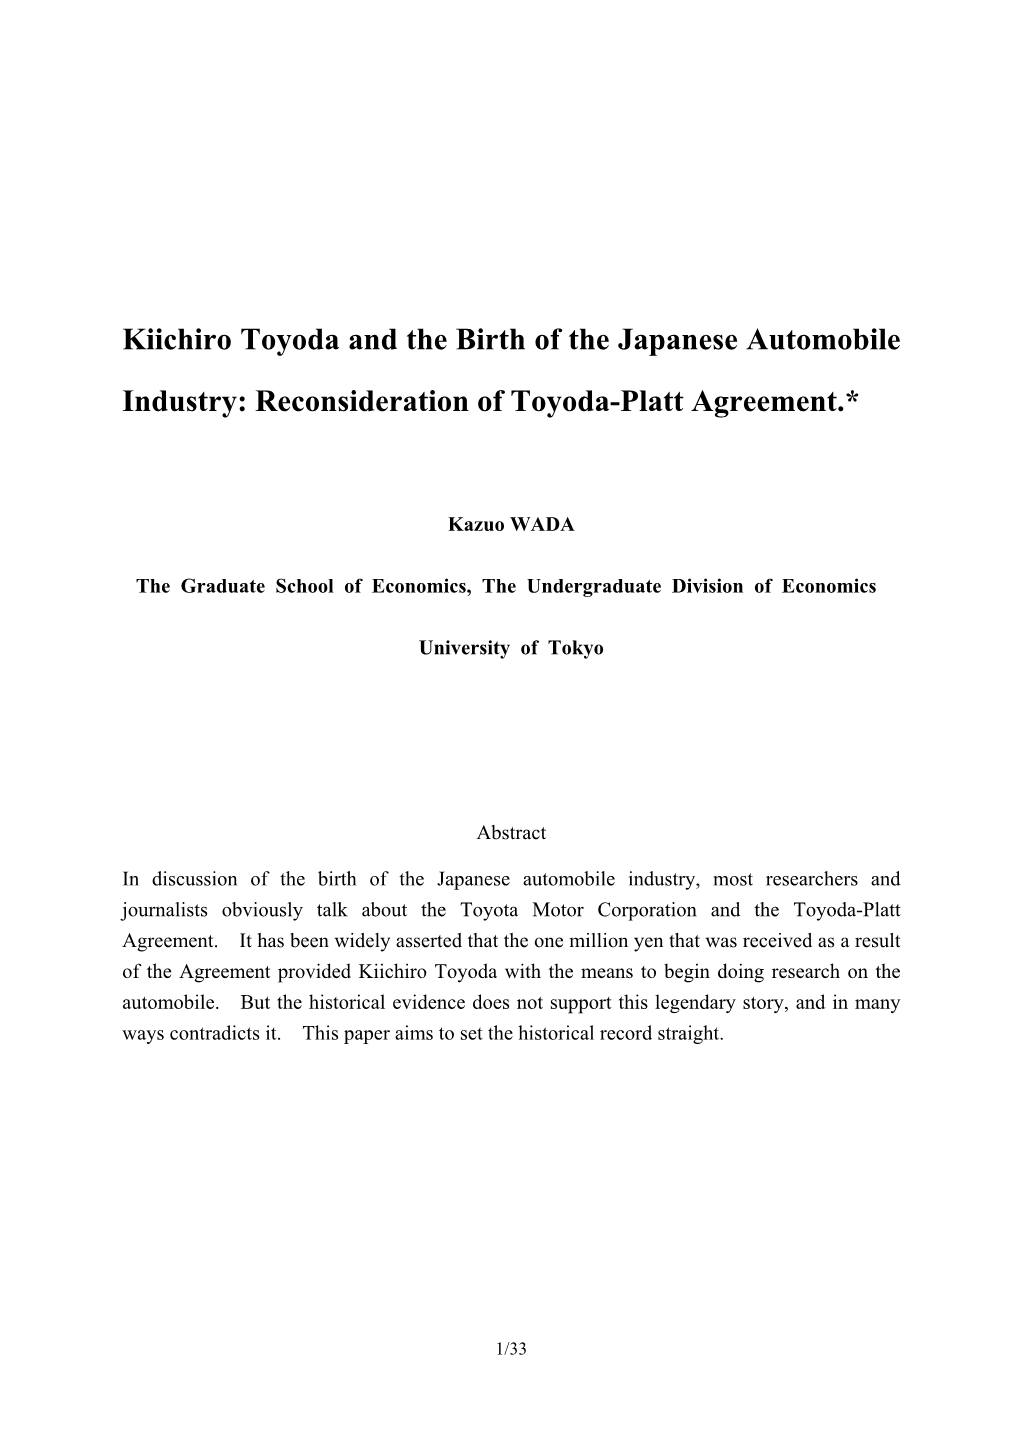 Kiichiro Toyoda and the Birth of the Japanese Automobile Industry: Reconsideration of Toyoda-Platt Agreement.*